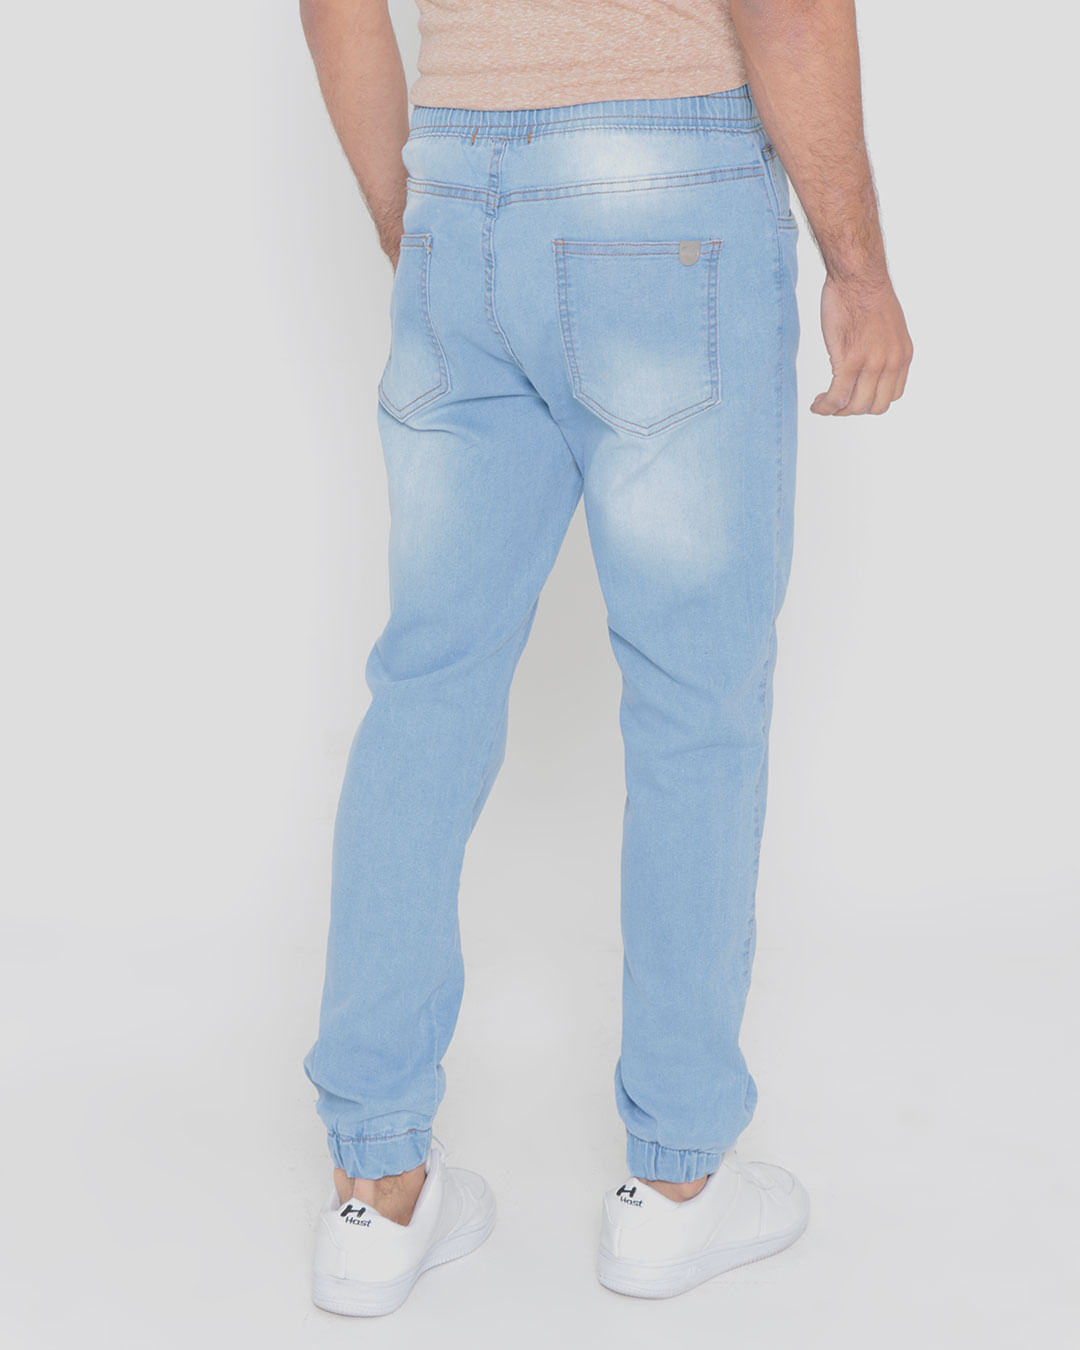 Calca-Jeans-Masculina-Jogger-Azul-Claro